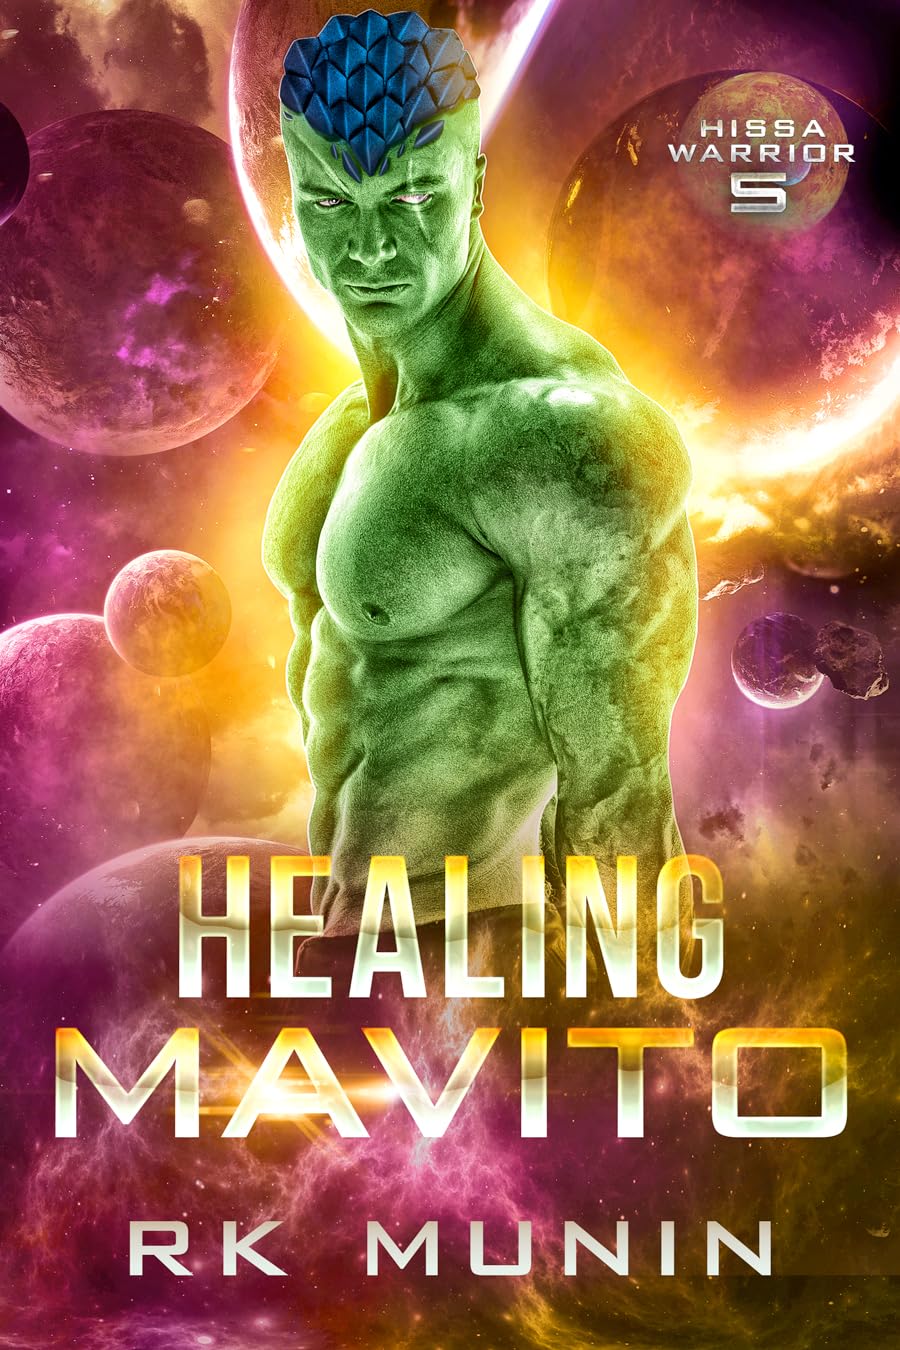 Healing Mavito